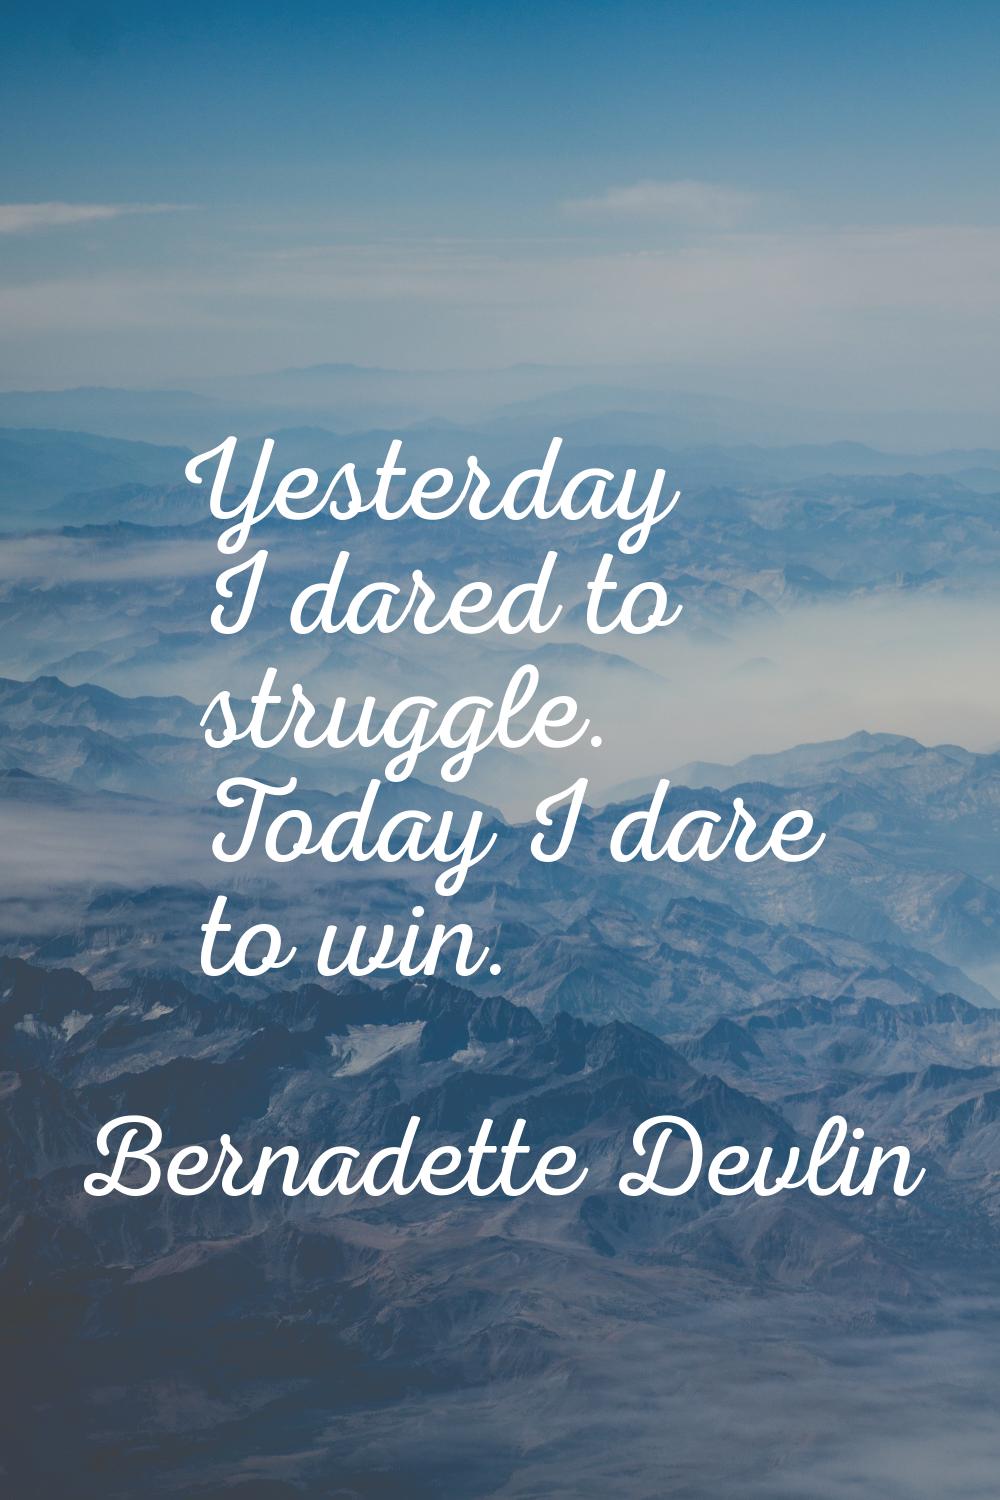 Yesterday I dared to struggle. Today I dare to win.